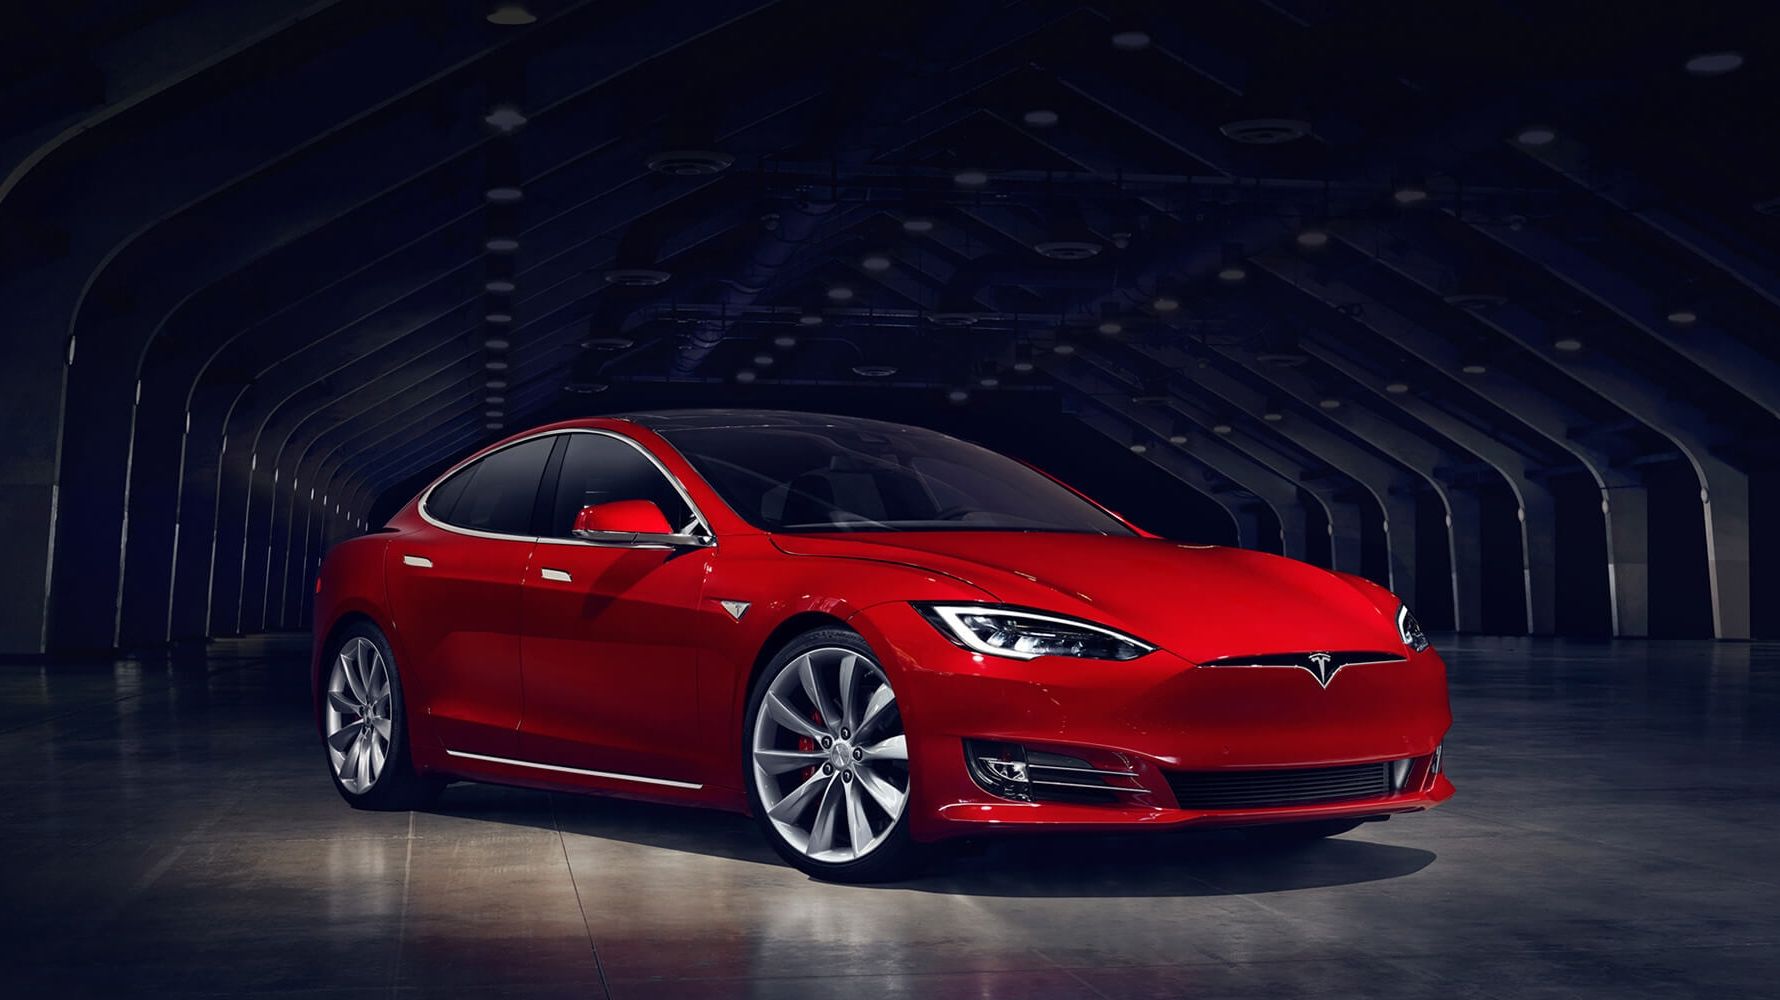 2016 The Tesla Model S Floats In Water – Wait, What?